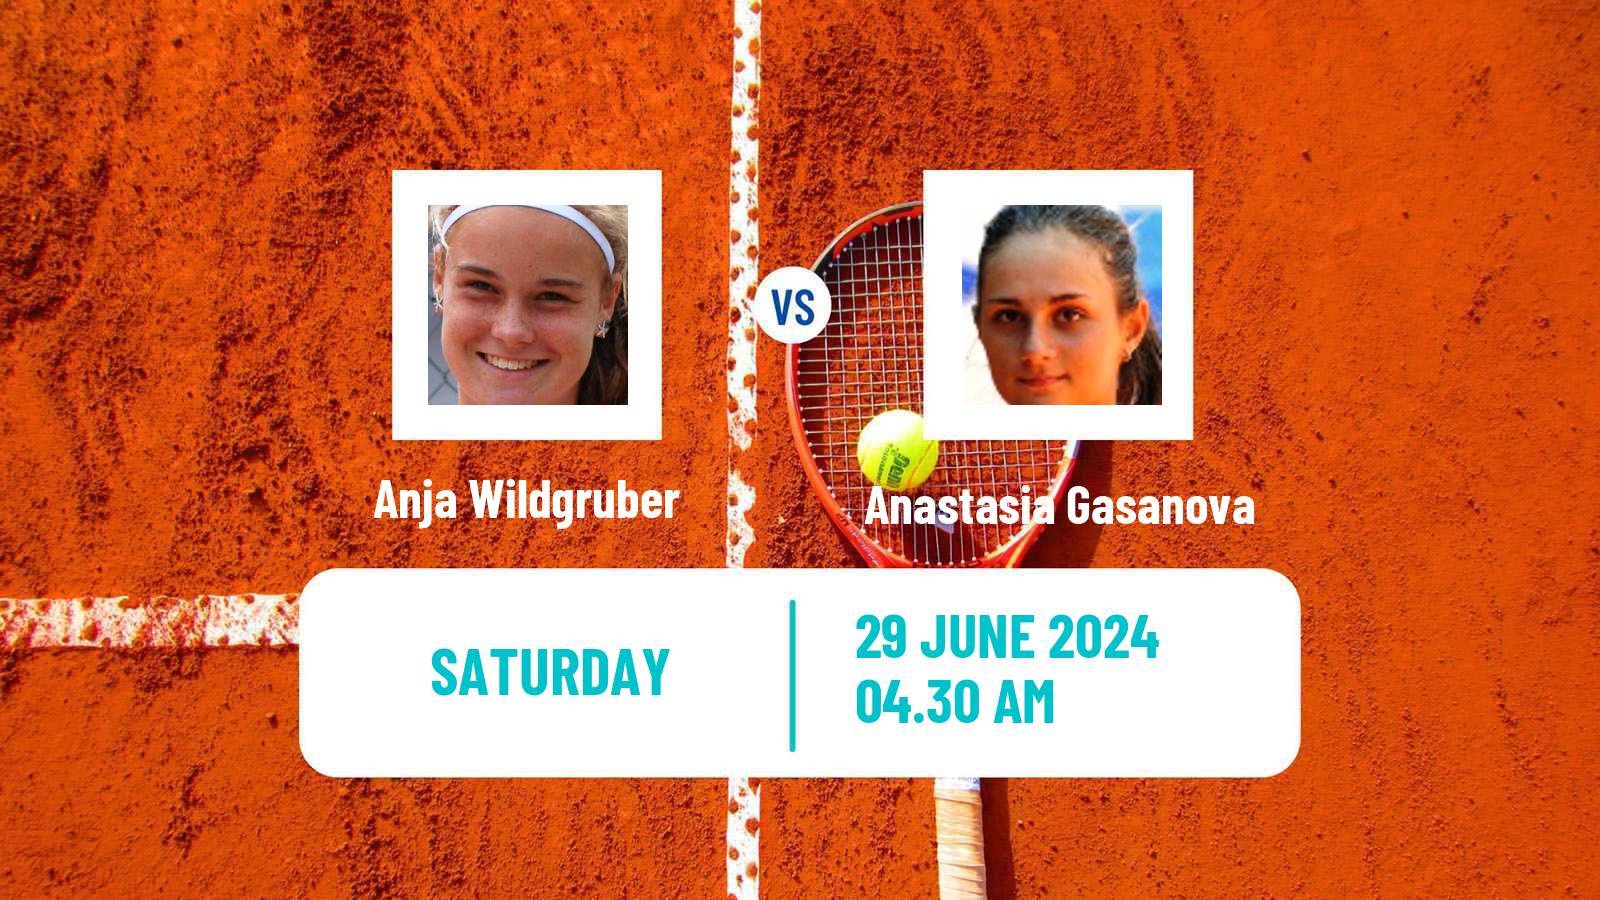 Tennis ITF W15 Monastir 24 Women Anja Wildgruber - Anastasia Gasanova